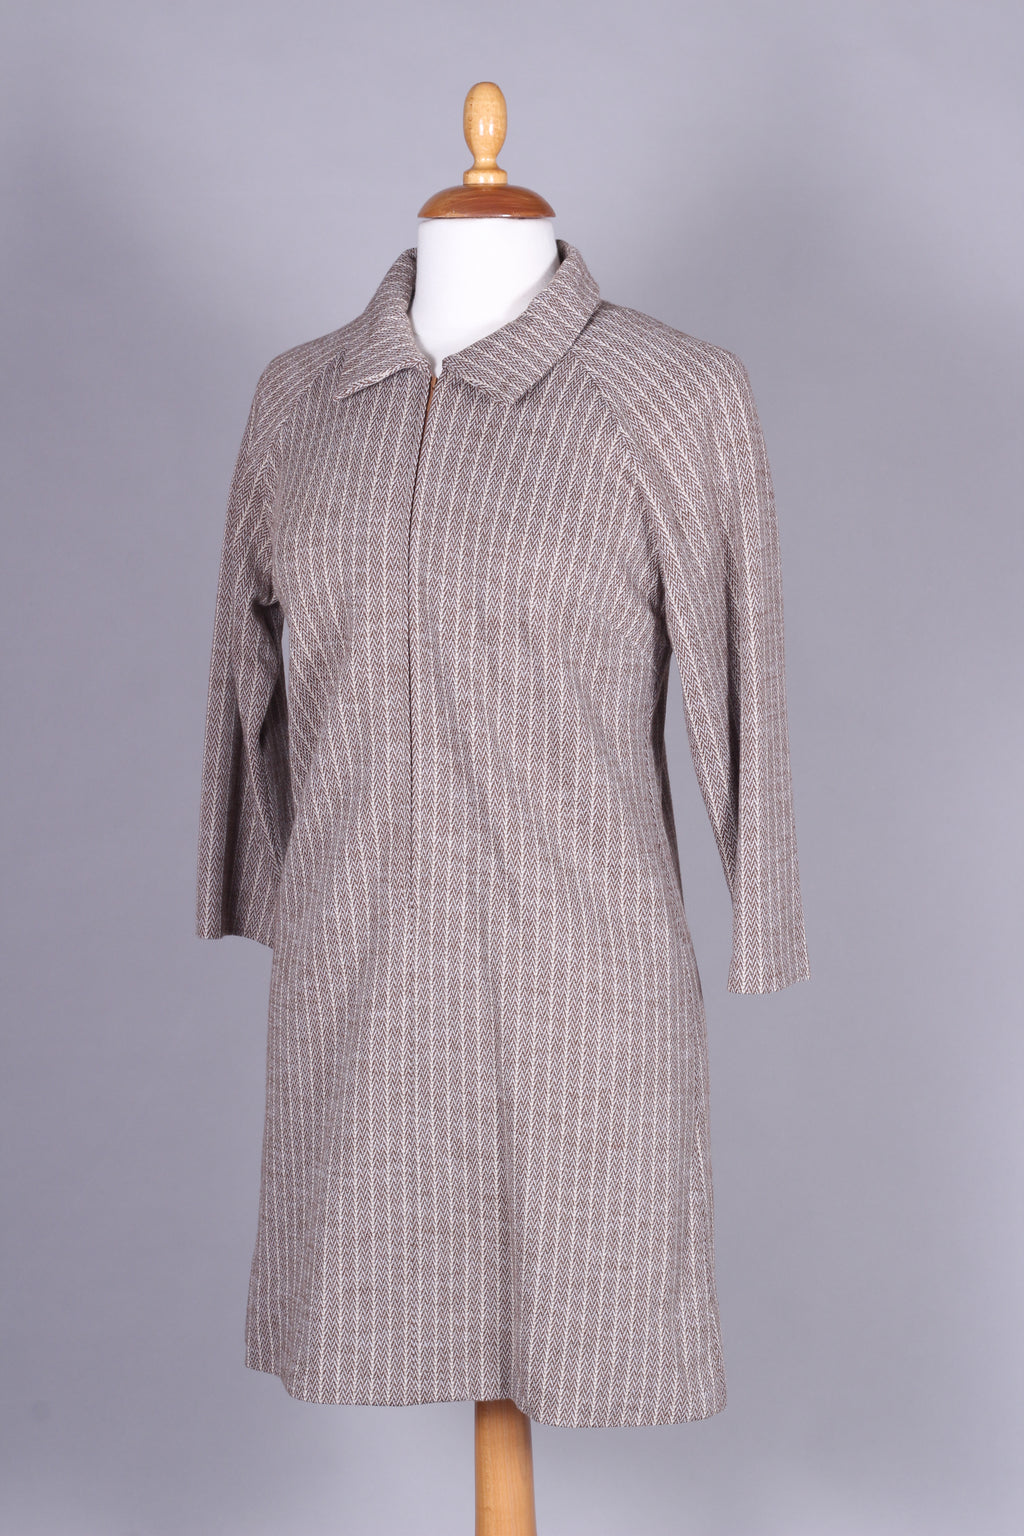 Jersey kjole, Asani, 1968. S